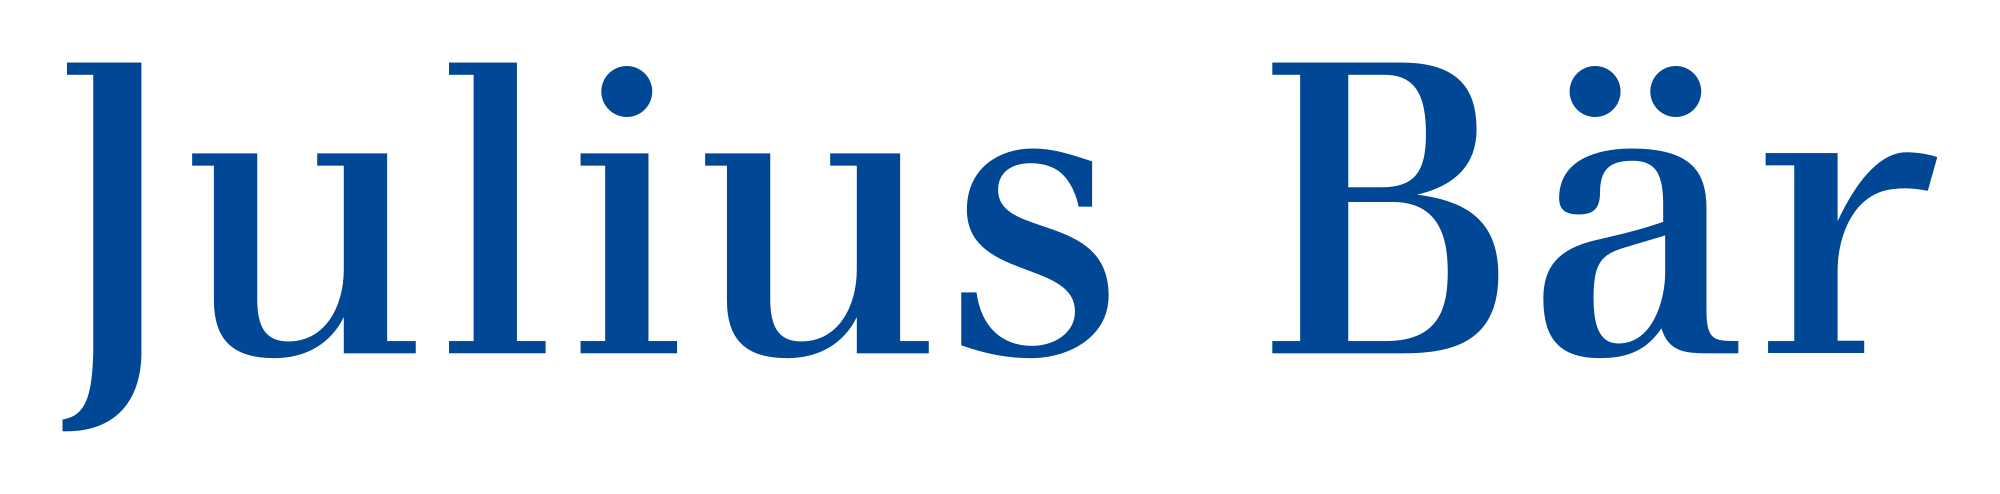 Julius Baer Group Brand Logo